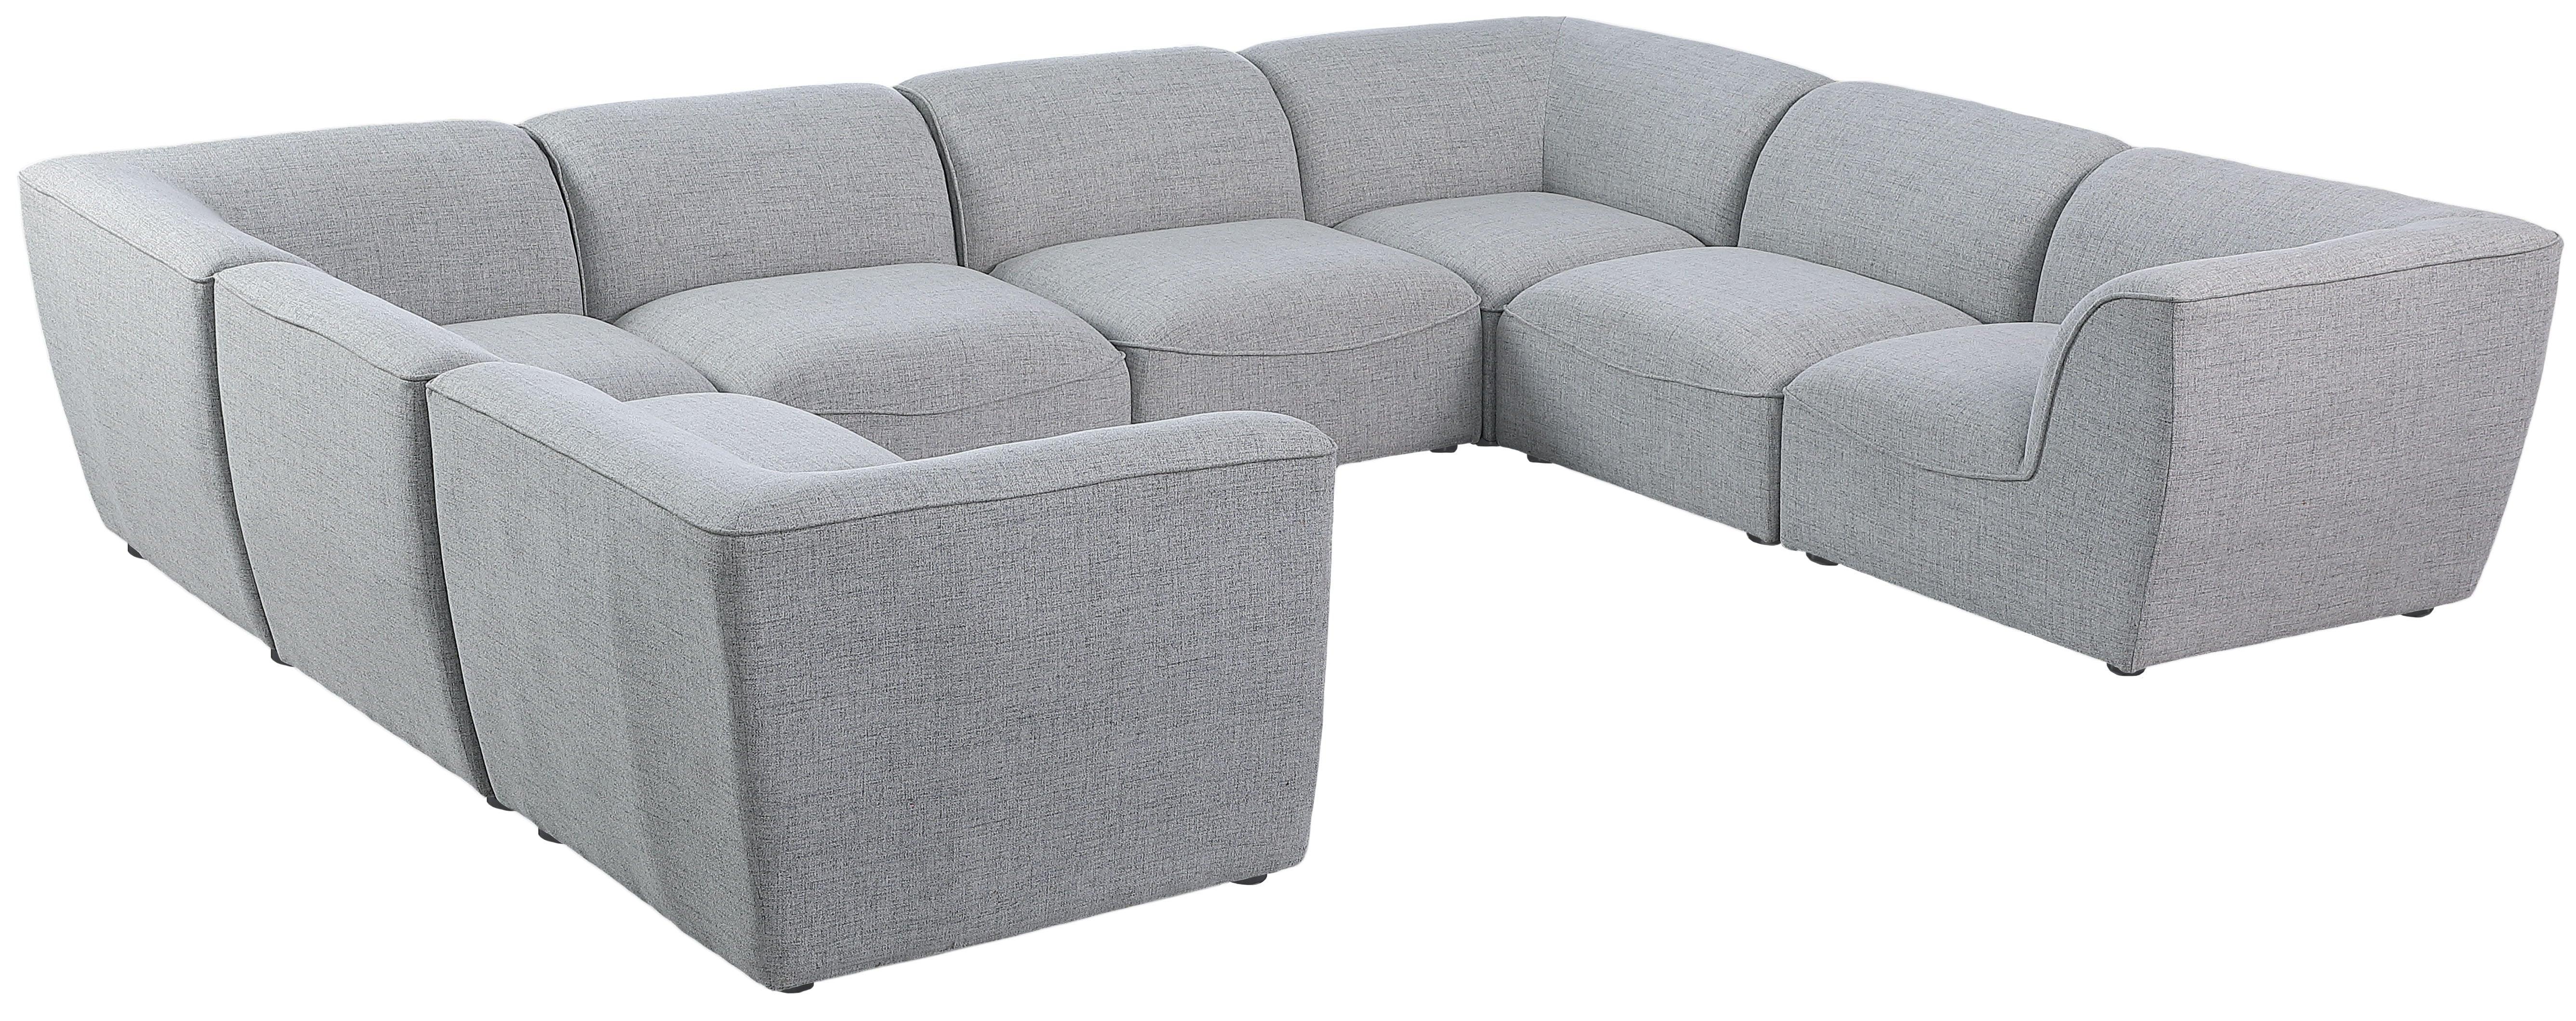 Meridian Furniture - Miramar - Modular Sectional 8 Piece - Gray - 5th Avenue Furniture